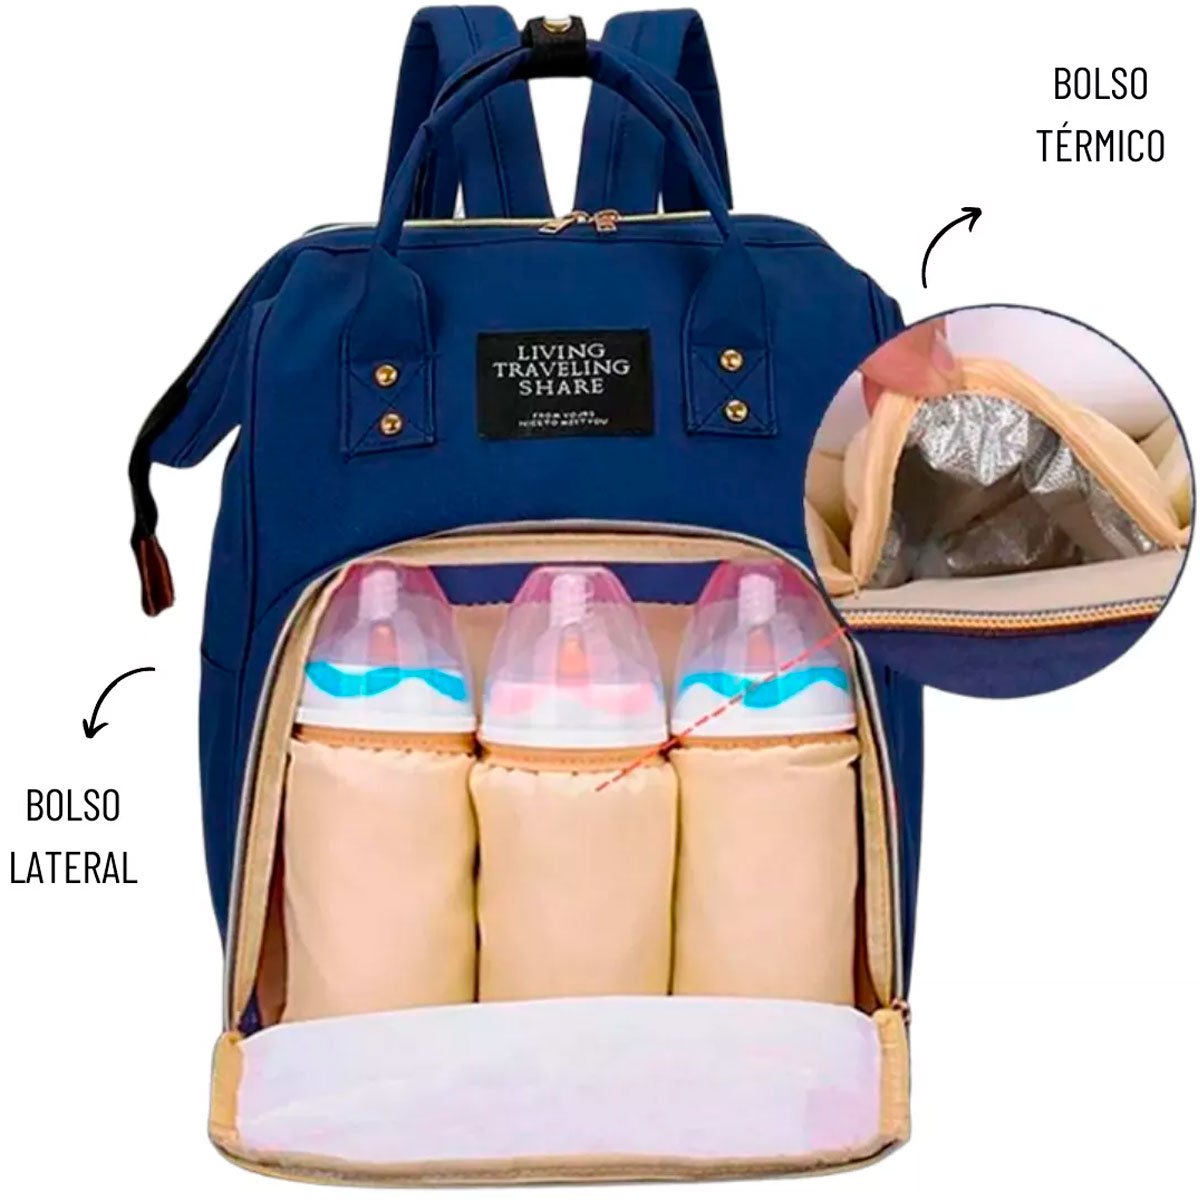 06 mochila mala bolsa maternidade multiuso multifuncional azul